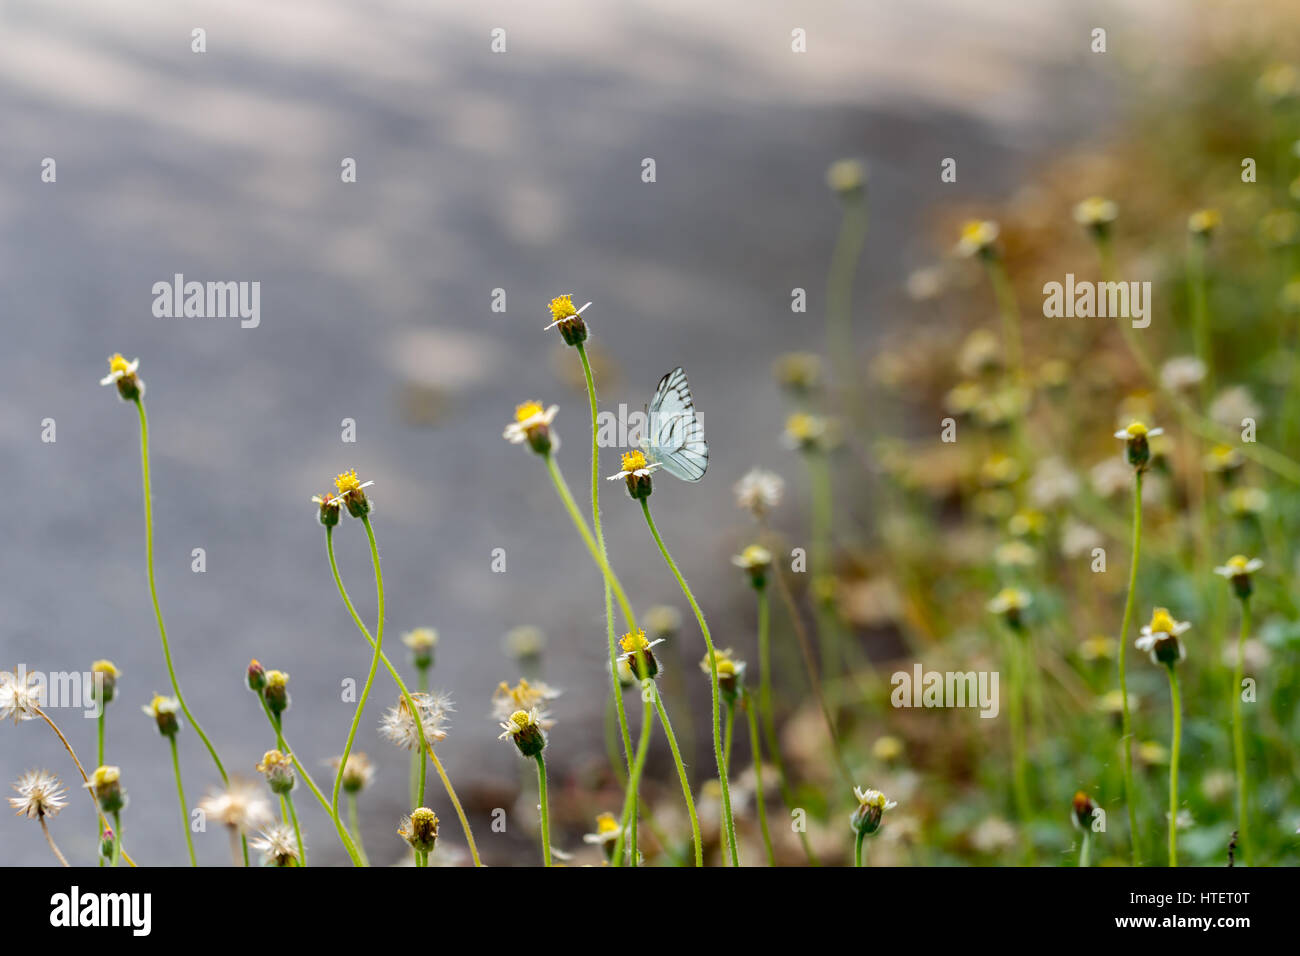 Grassy flower-Coldenia procumbens Linn Stock Photo